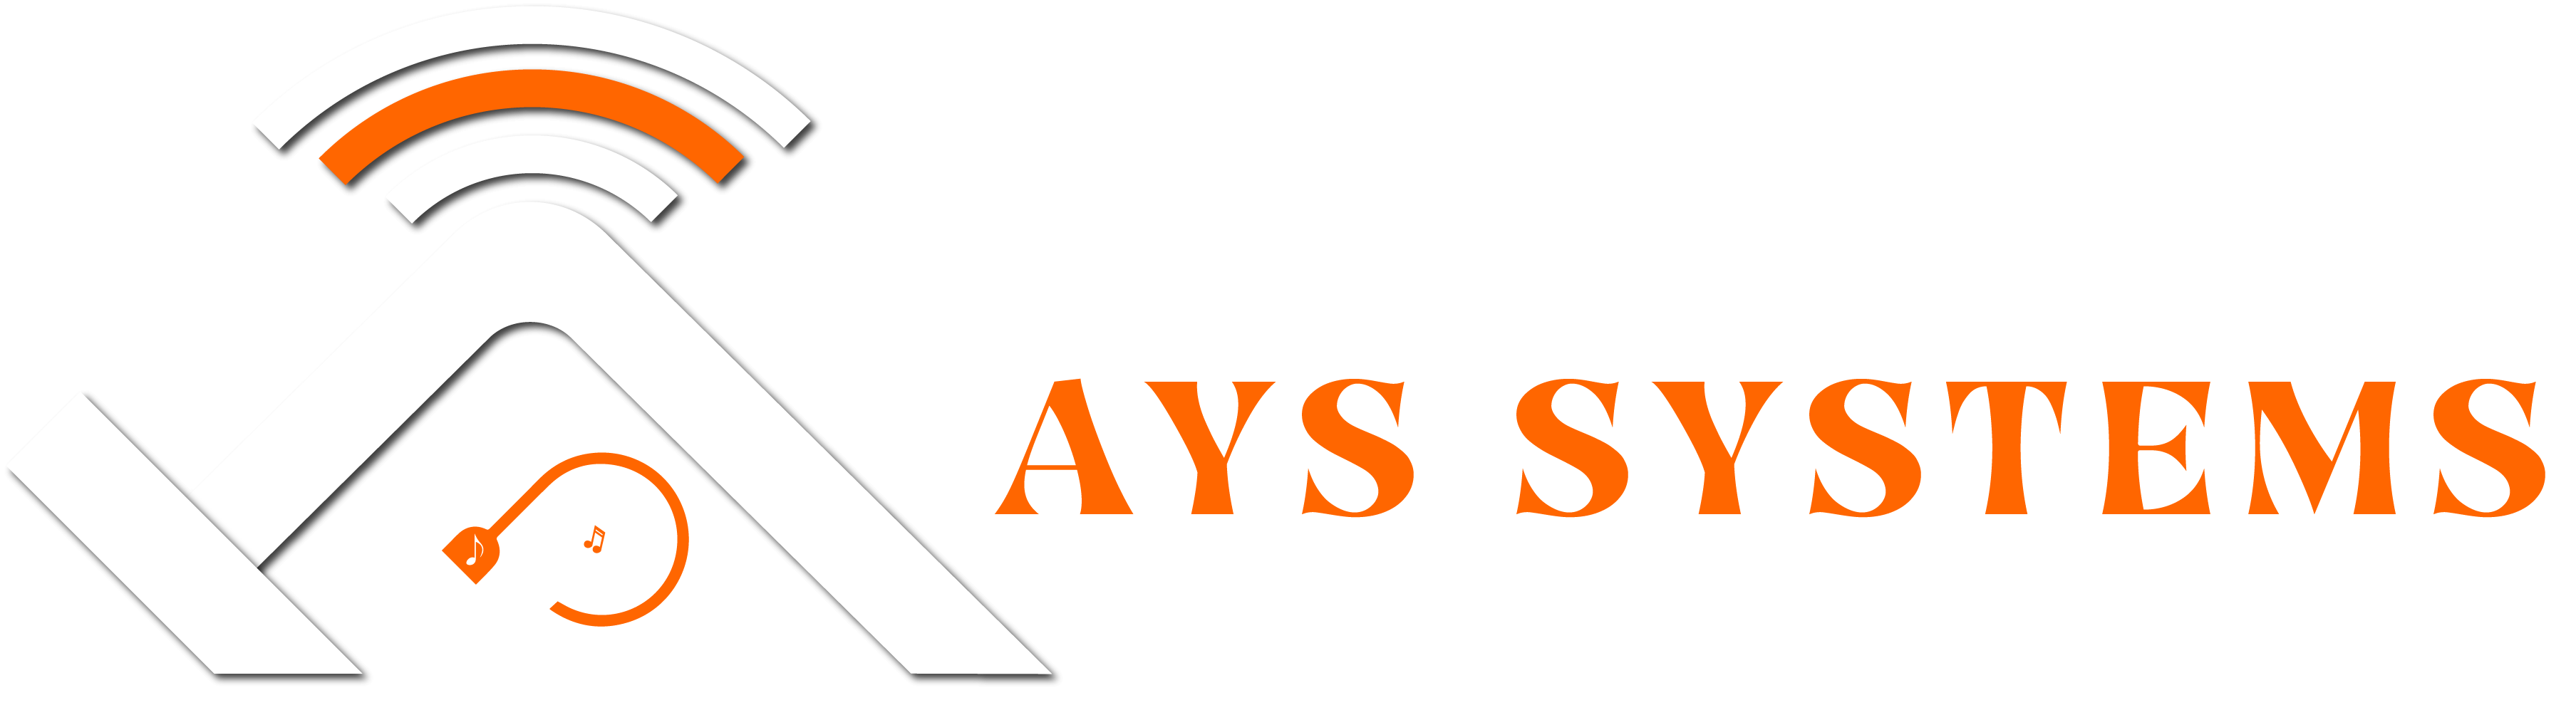 Ays System